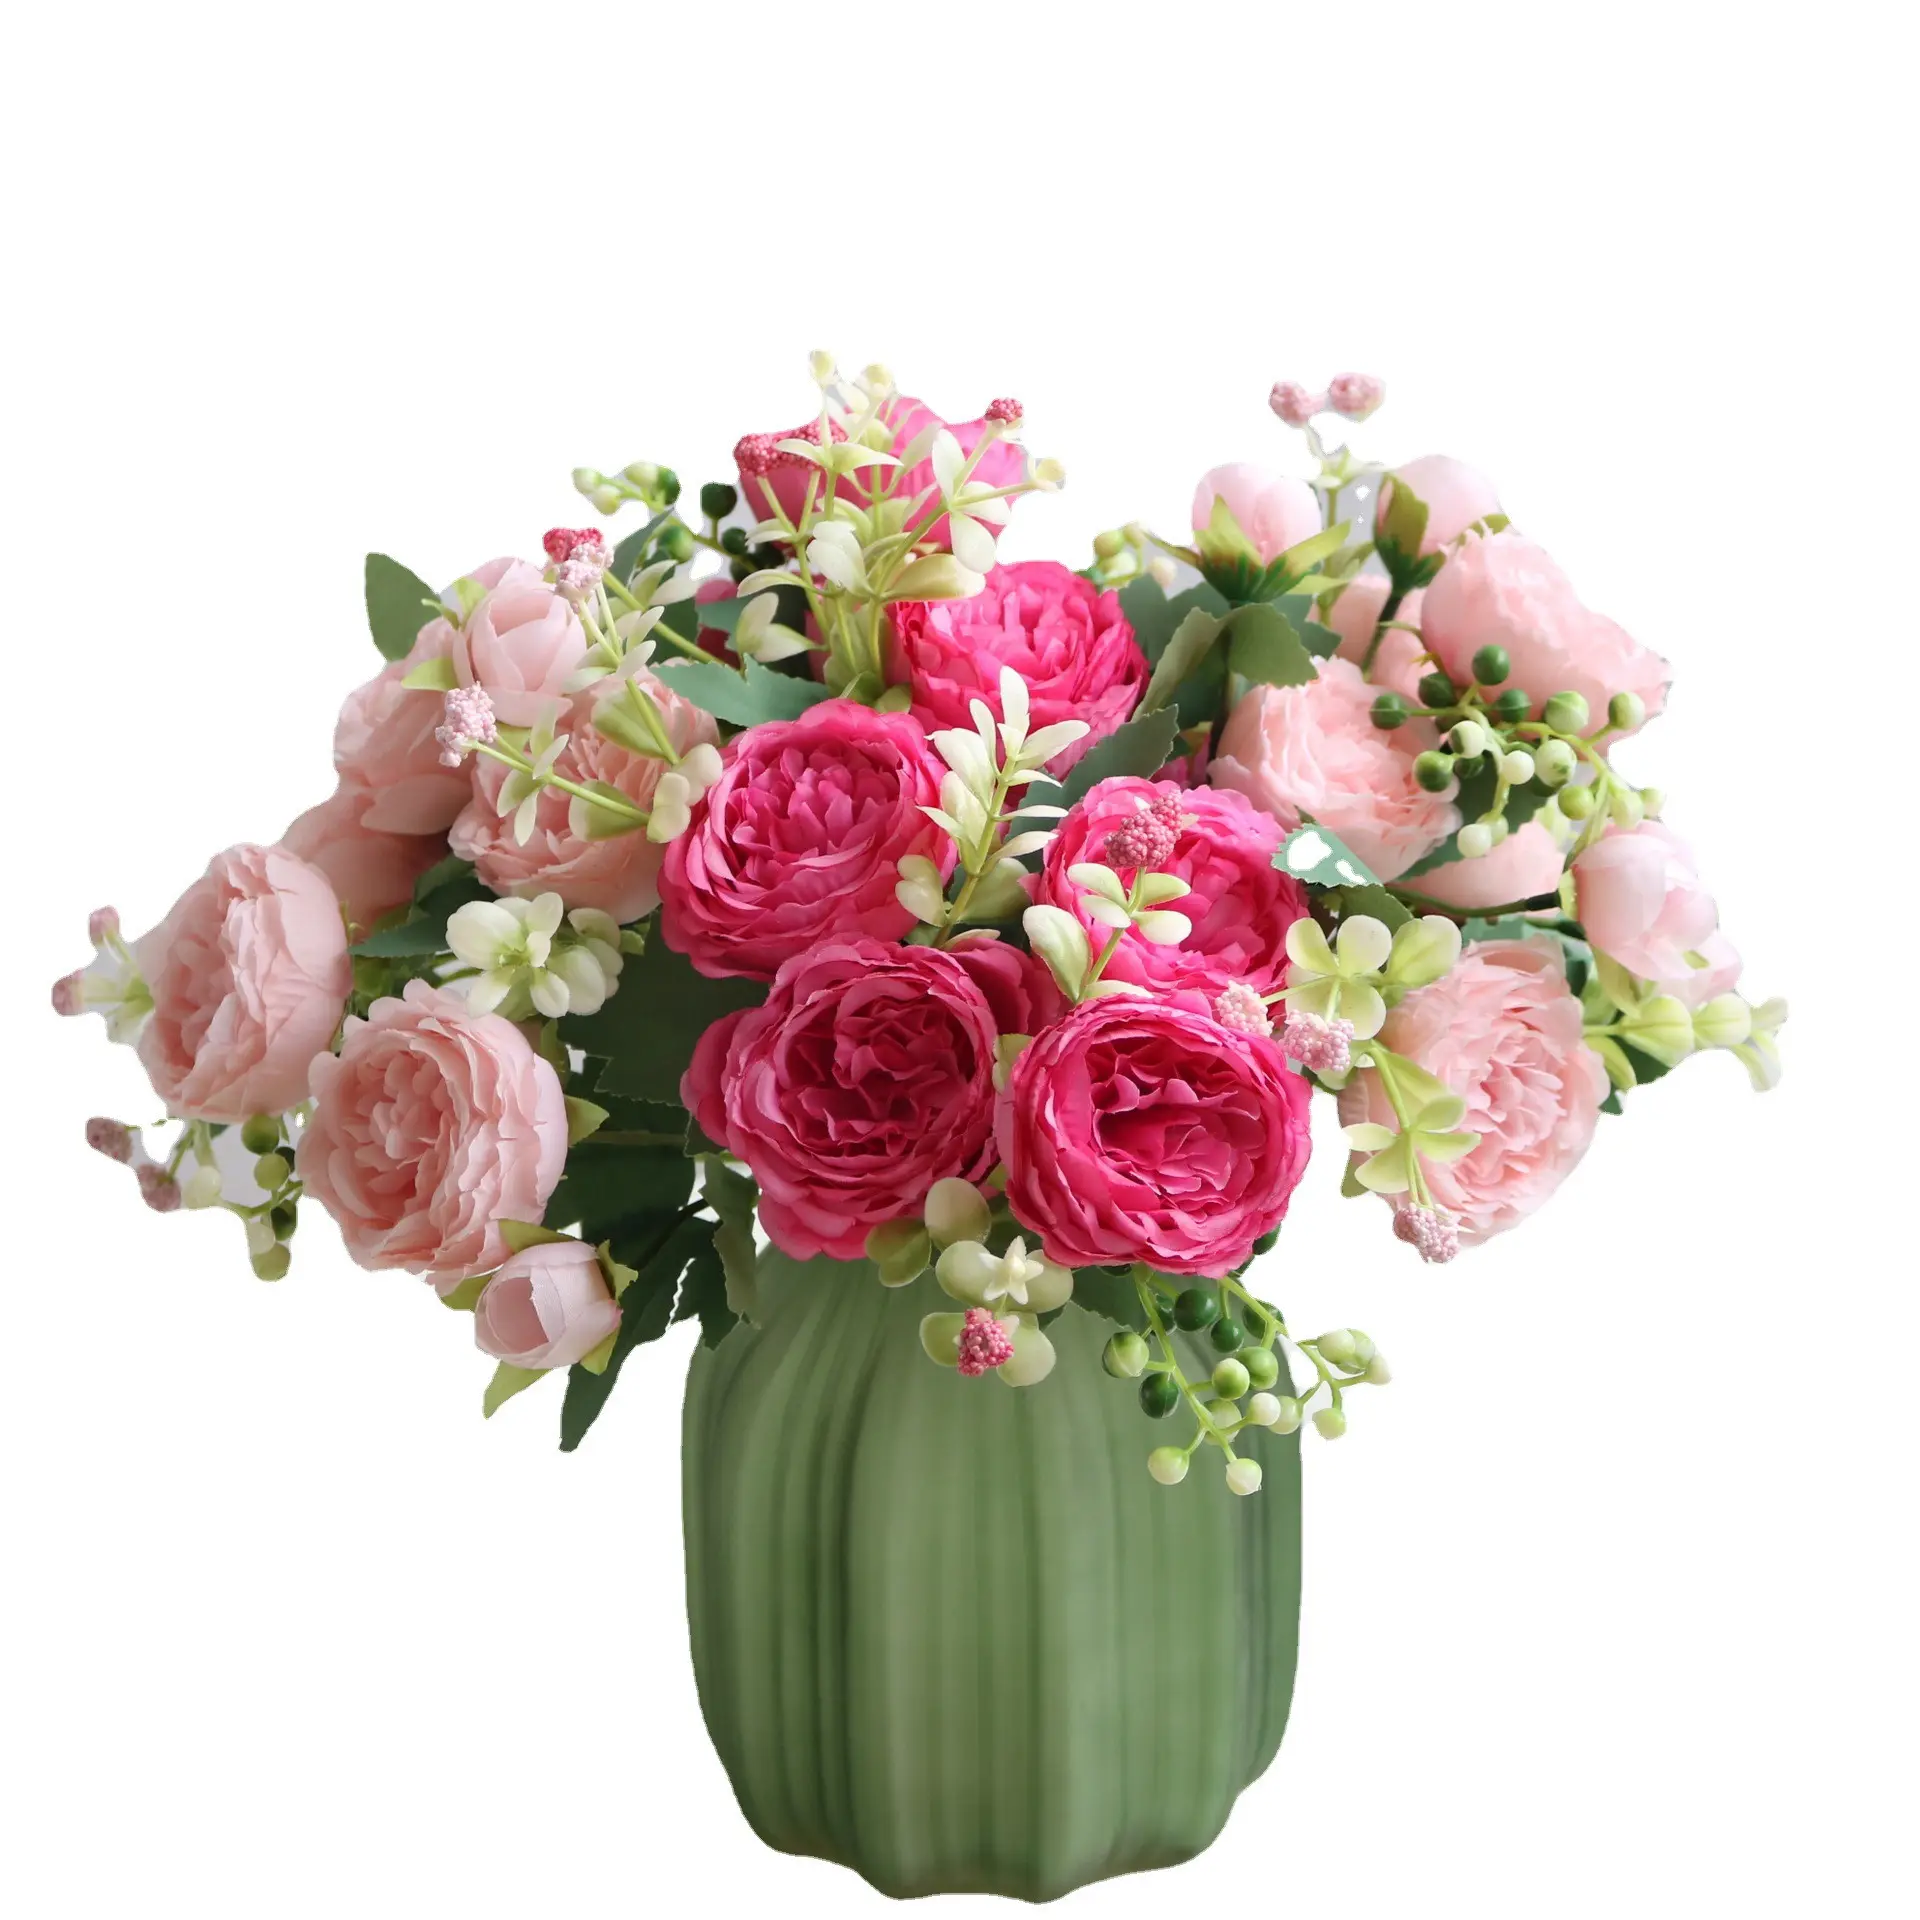 Hot Sales 5 Heads Peony Rose Silk Flower For Garden Home Decoration Centerpieces Wedding Artificial Flower Bridal Bouquet